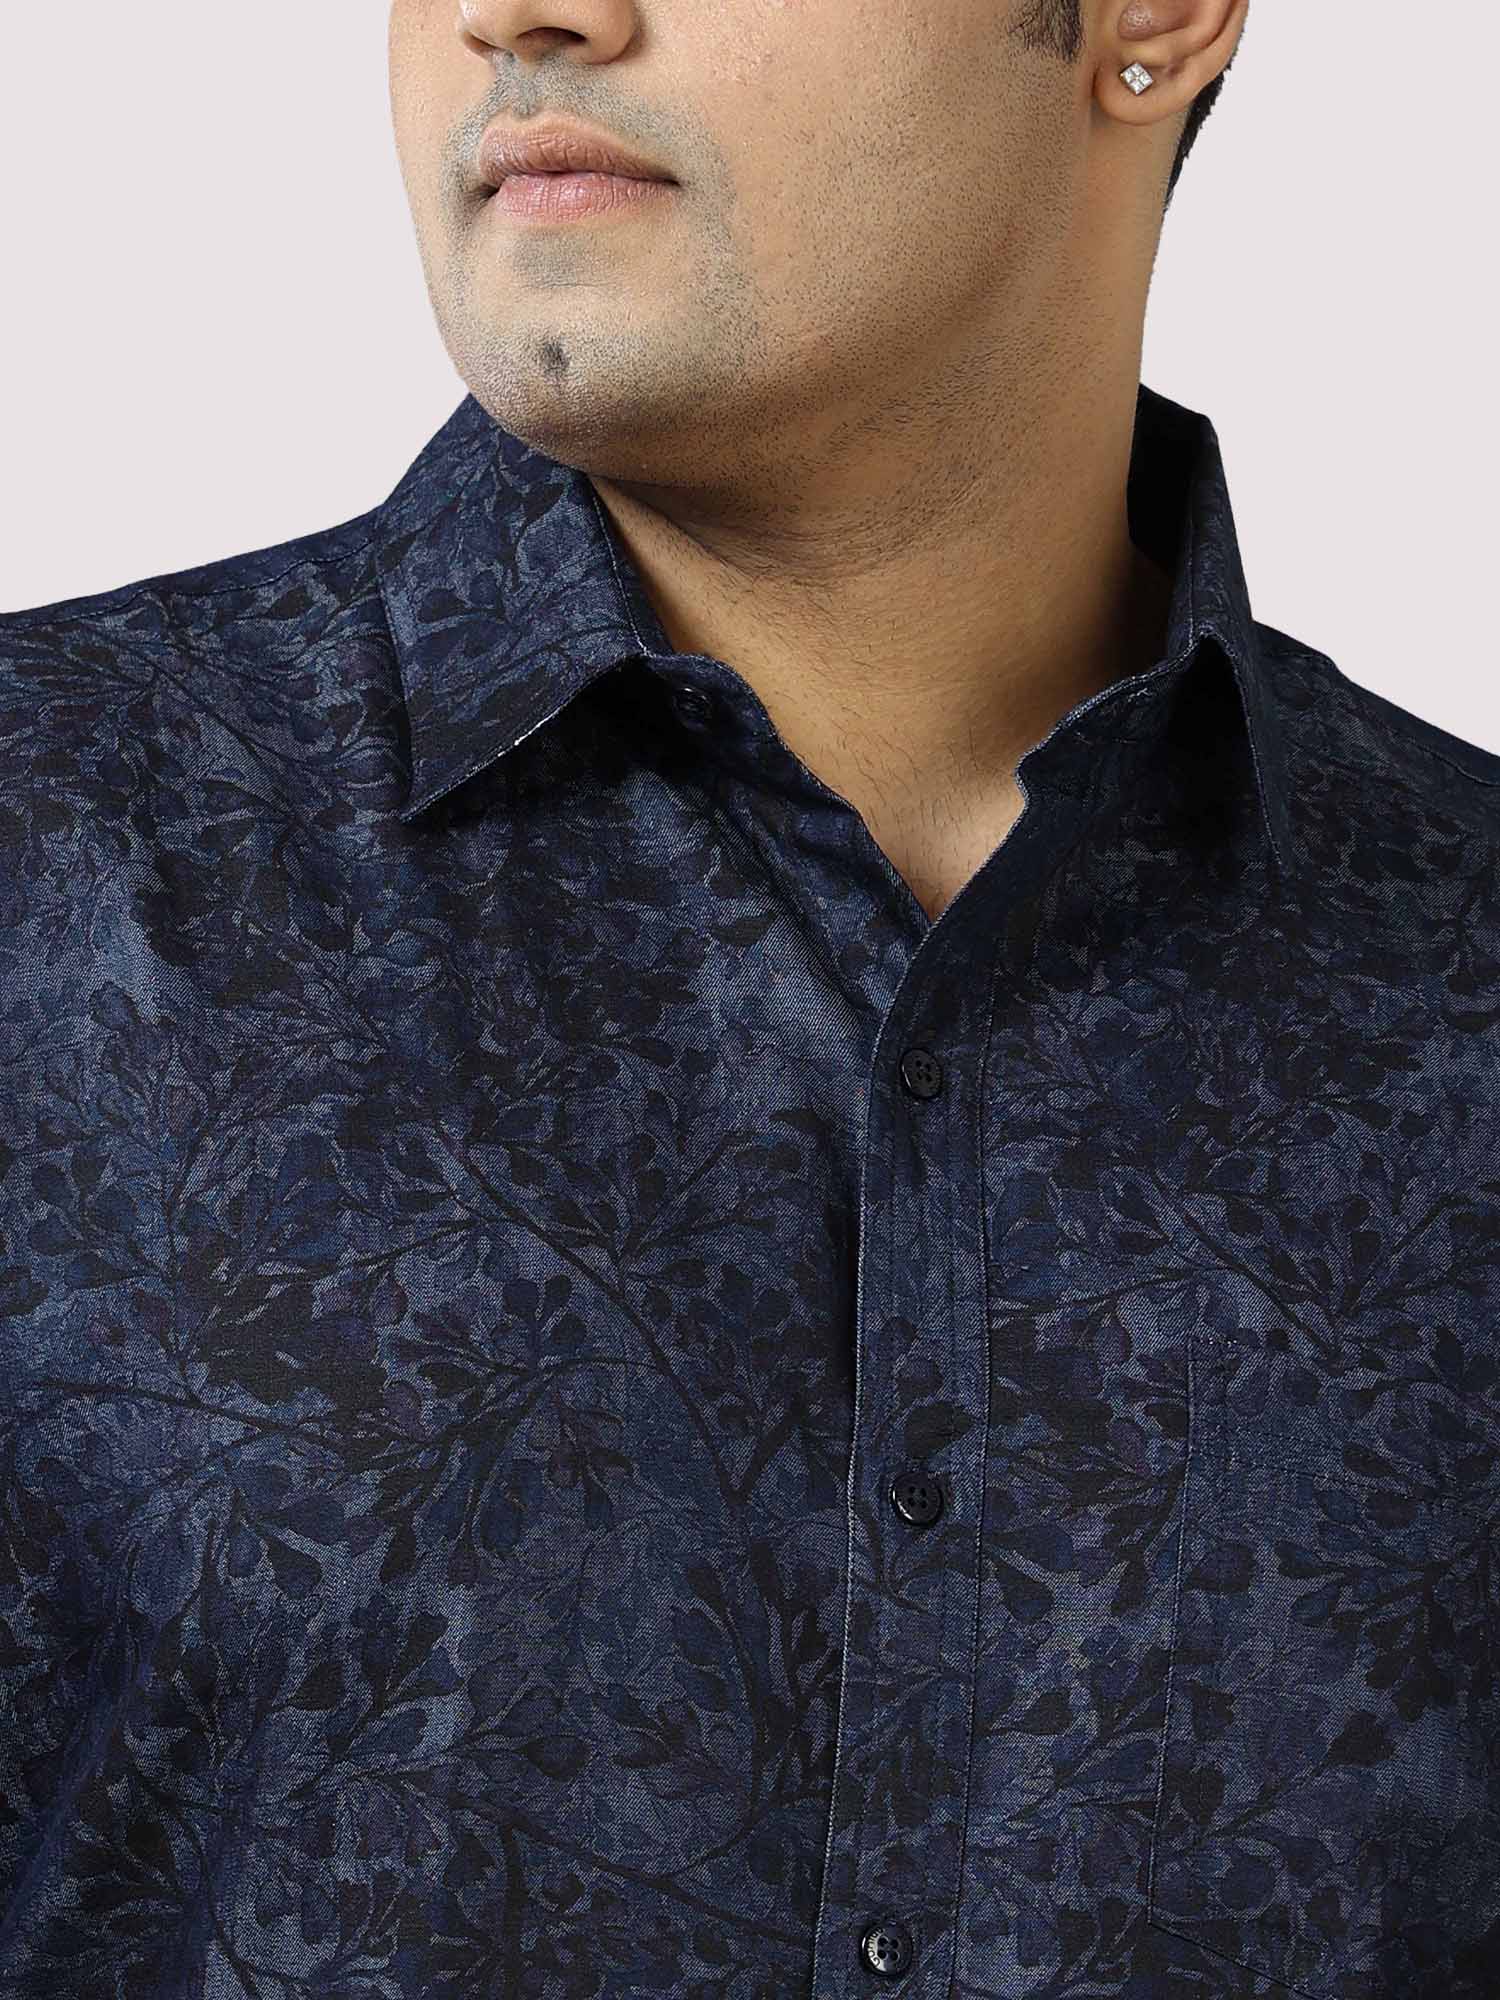 Sky Leaf Digital Printed Denim Half Sleeve Shirt Men's Plus Size